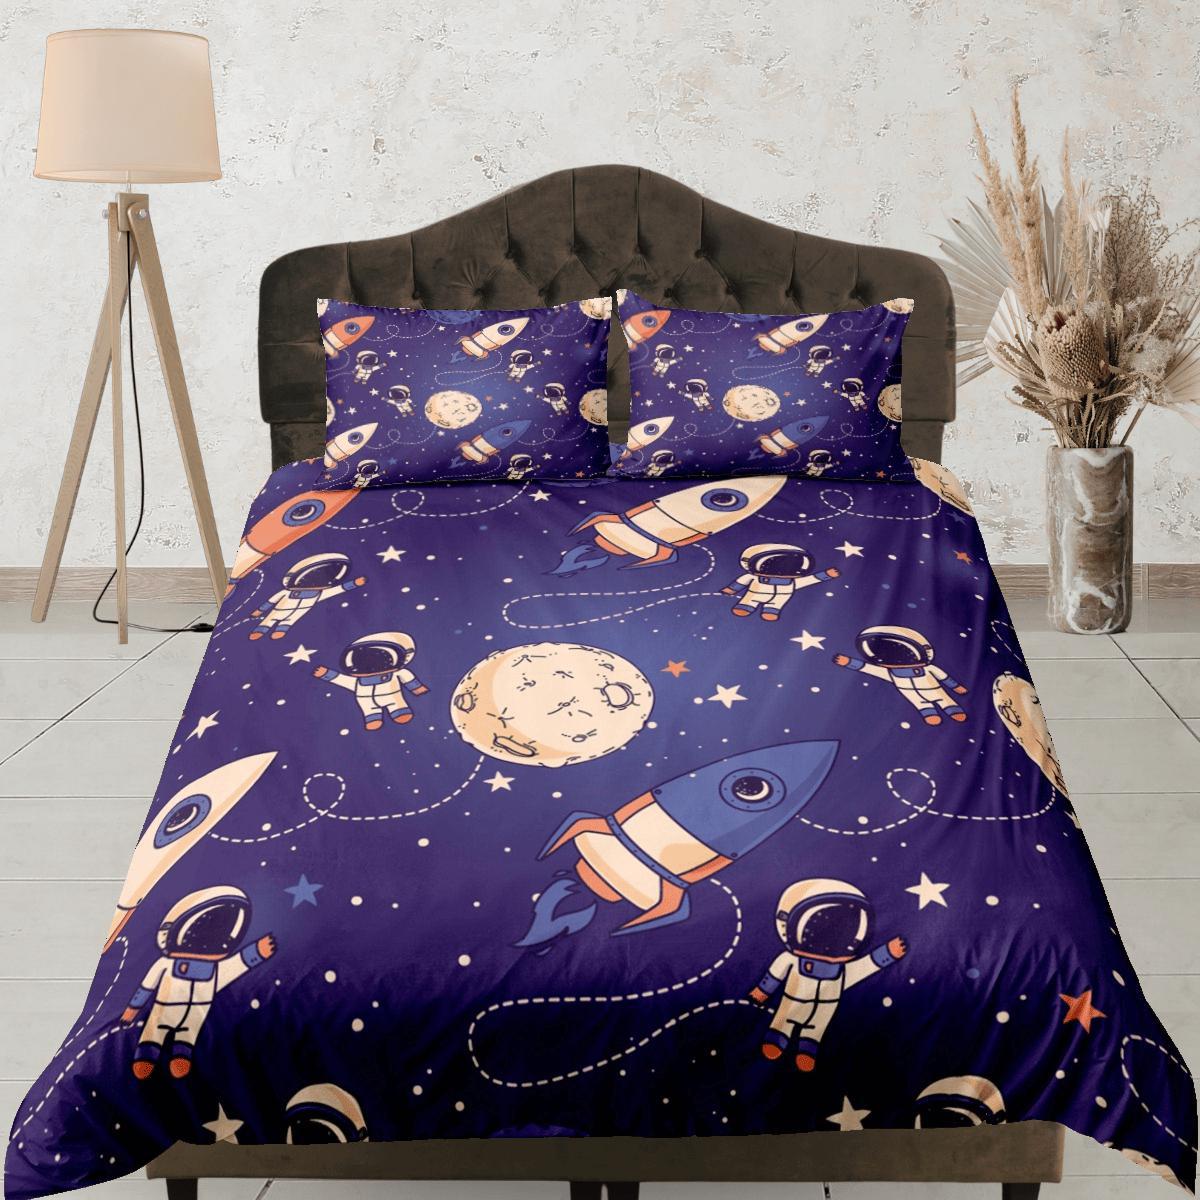 daintyduvet Galaxy Astronomy Purple Duvet Cover Set Bedspread, Teens Kids Bedding & Pillowcase